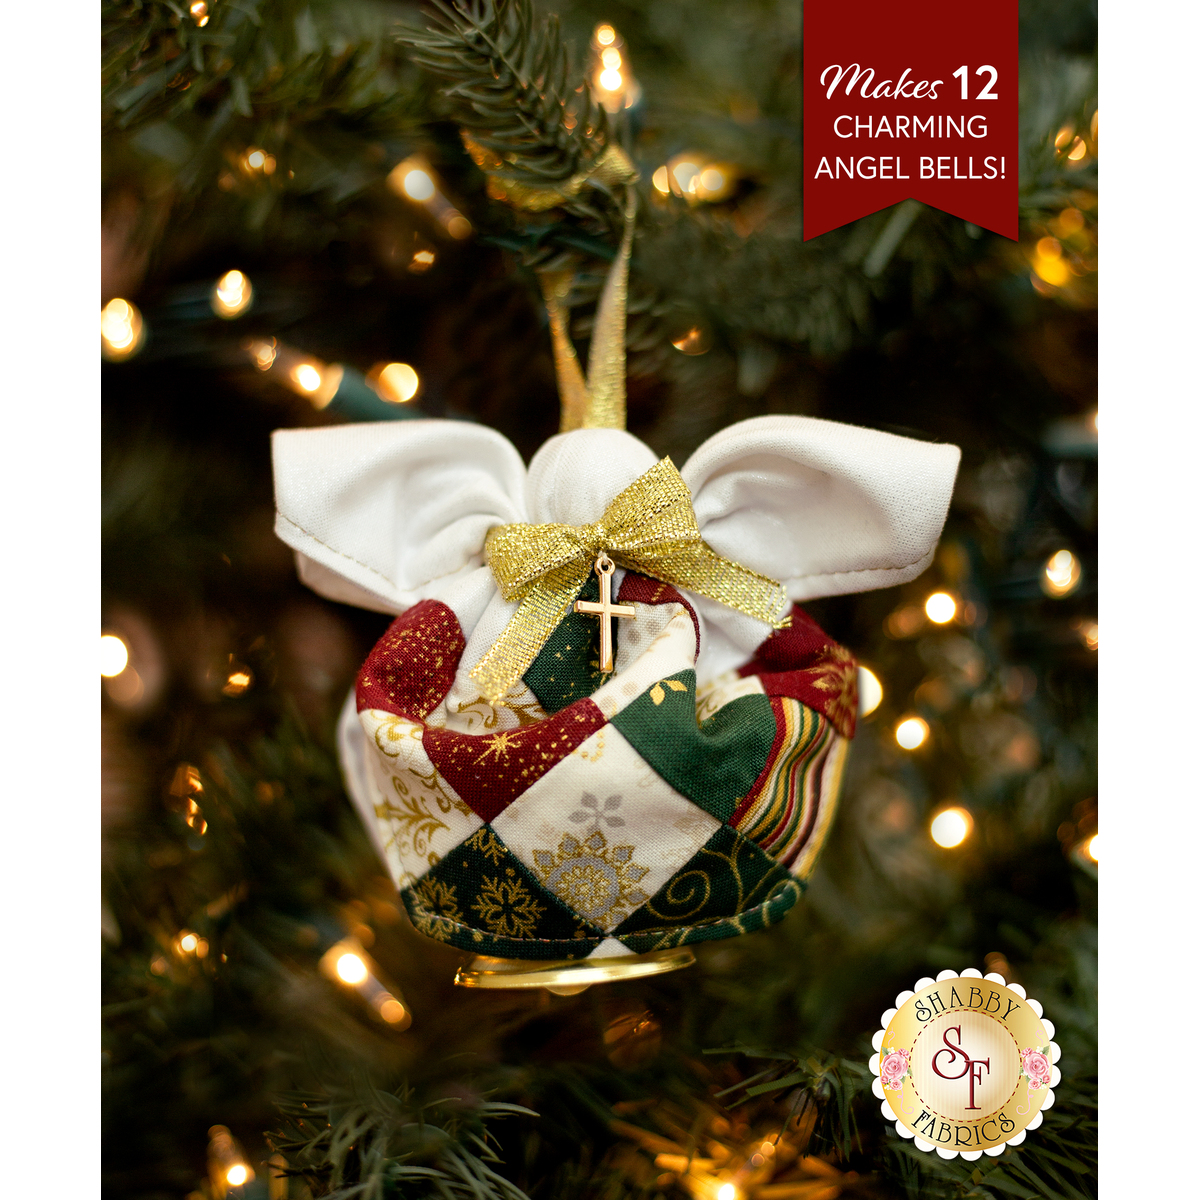 Stitch Guide - Santa Clothesline Ornament